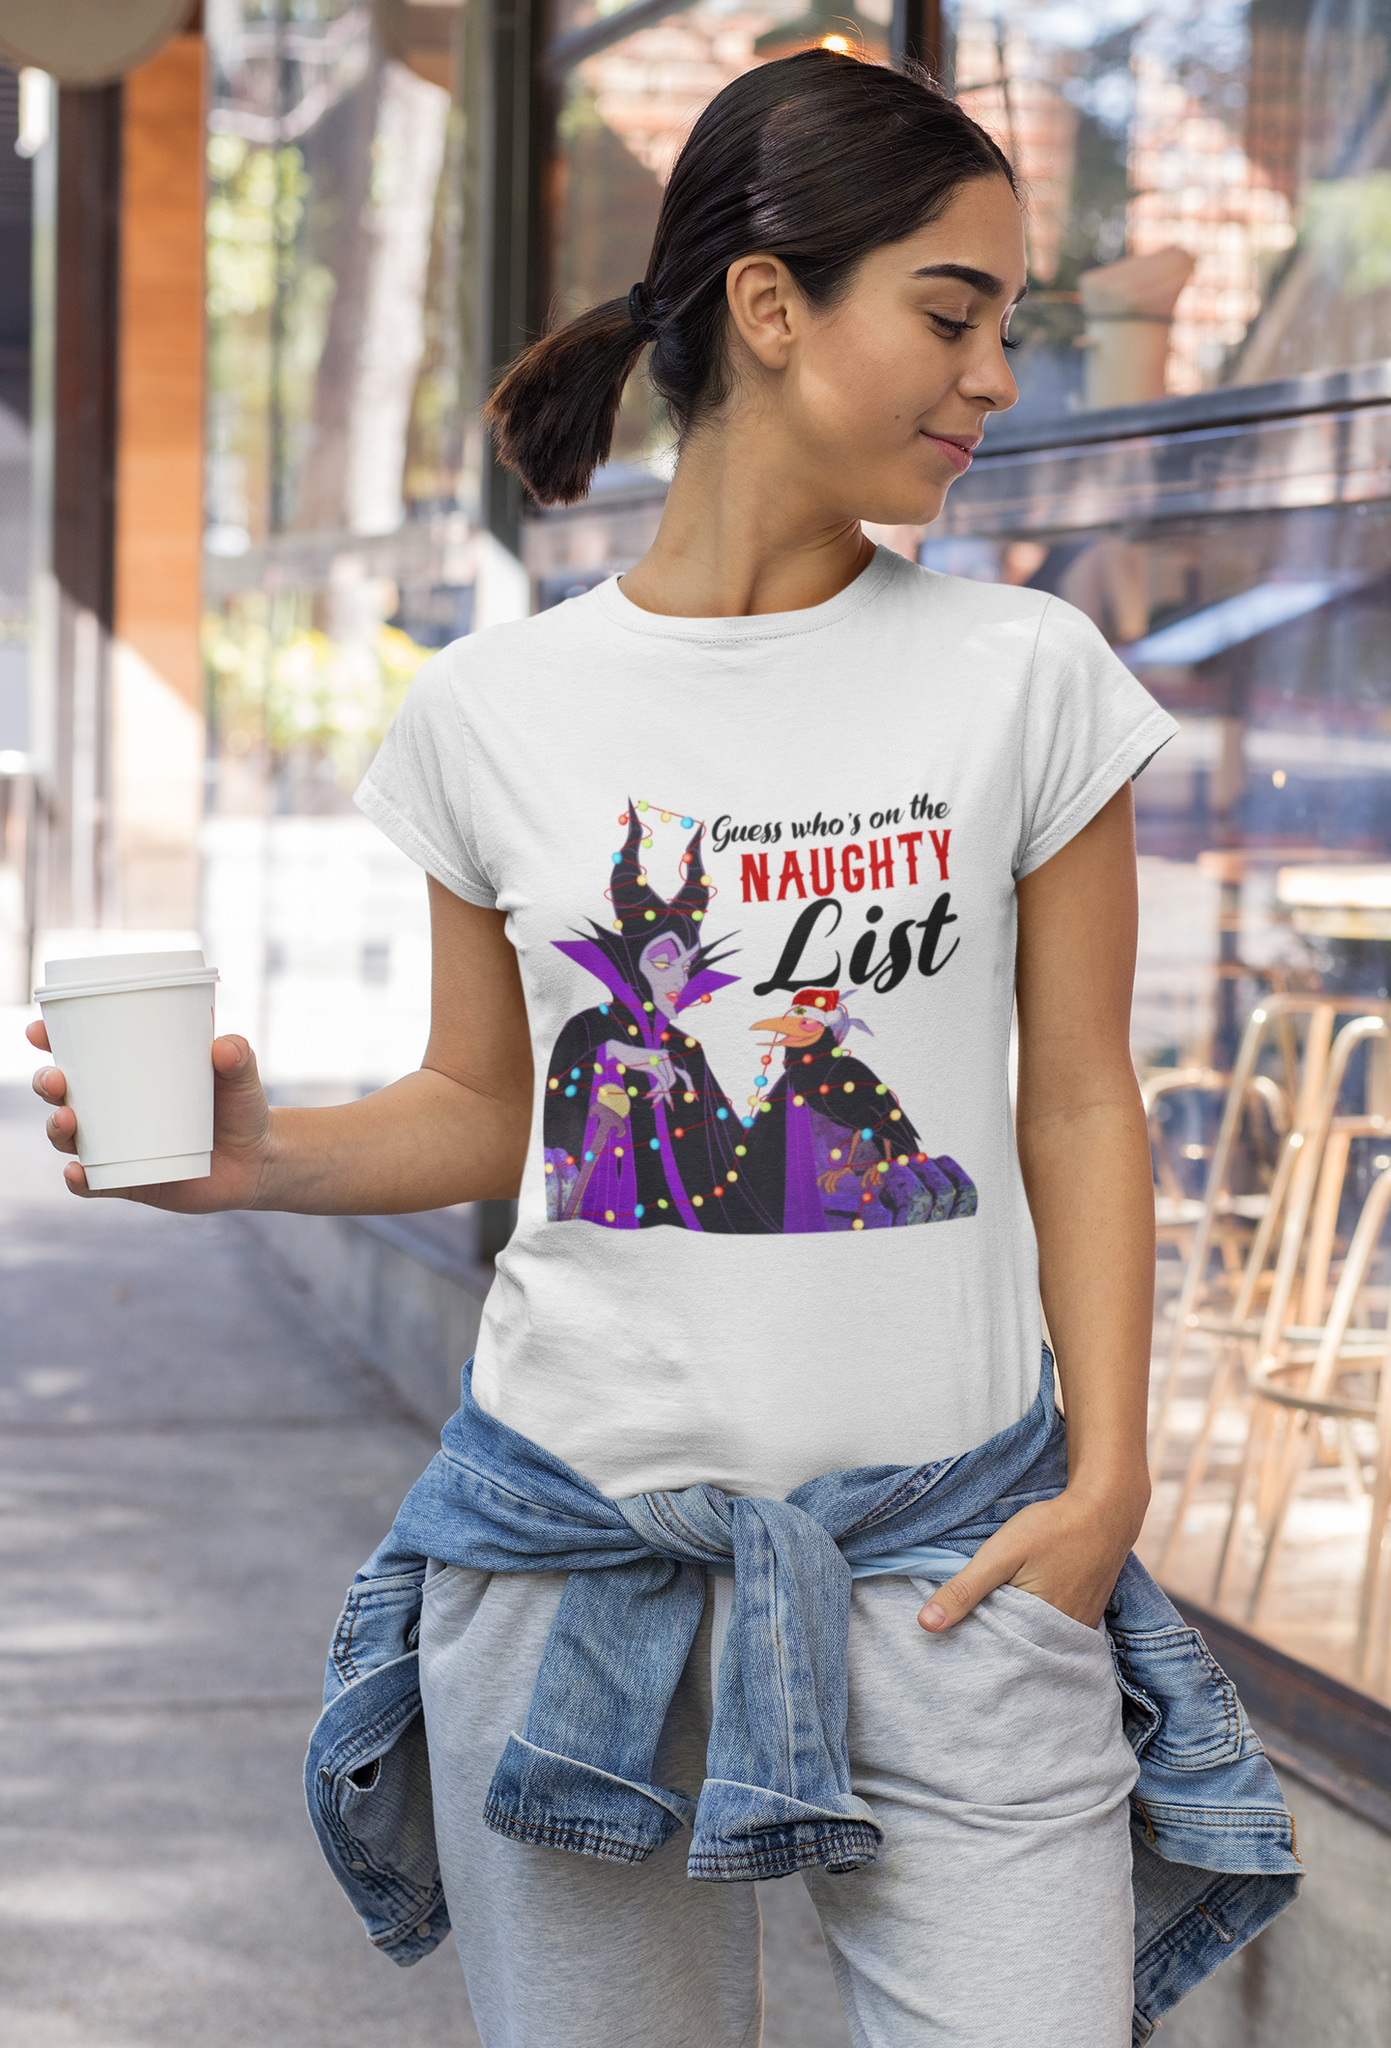 Disney Maleficent T Shirt, Disney Villains T Shirt, Diaval Maleficent Tshirt, Guess Whos On The Naughty List Shirt